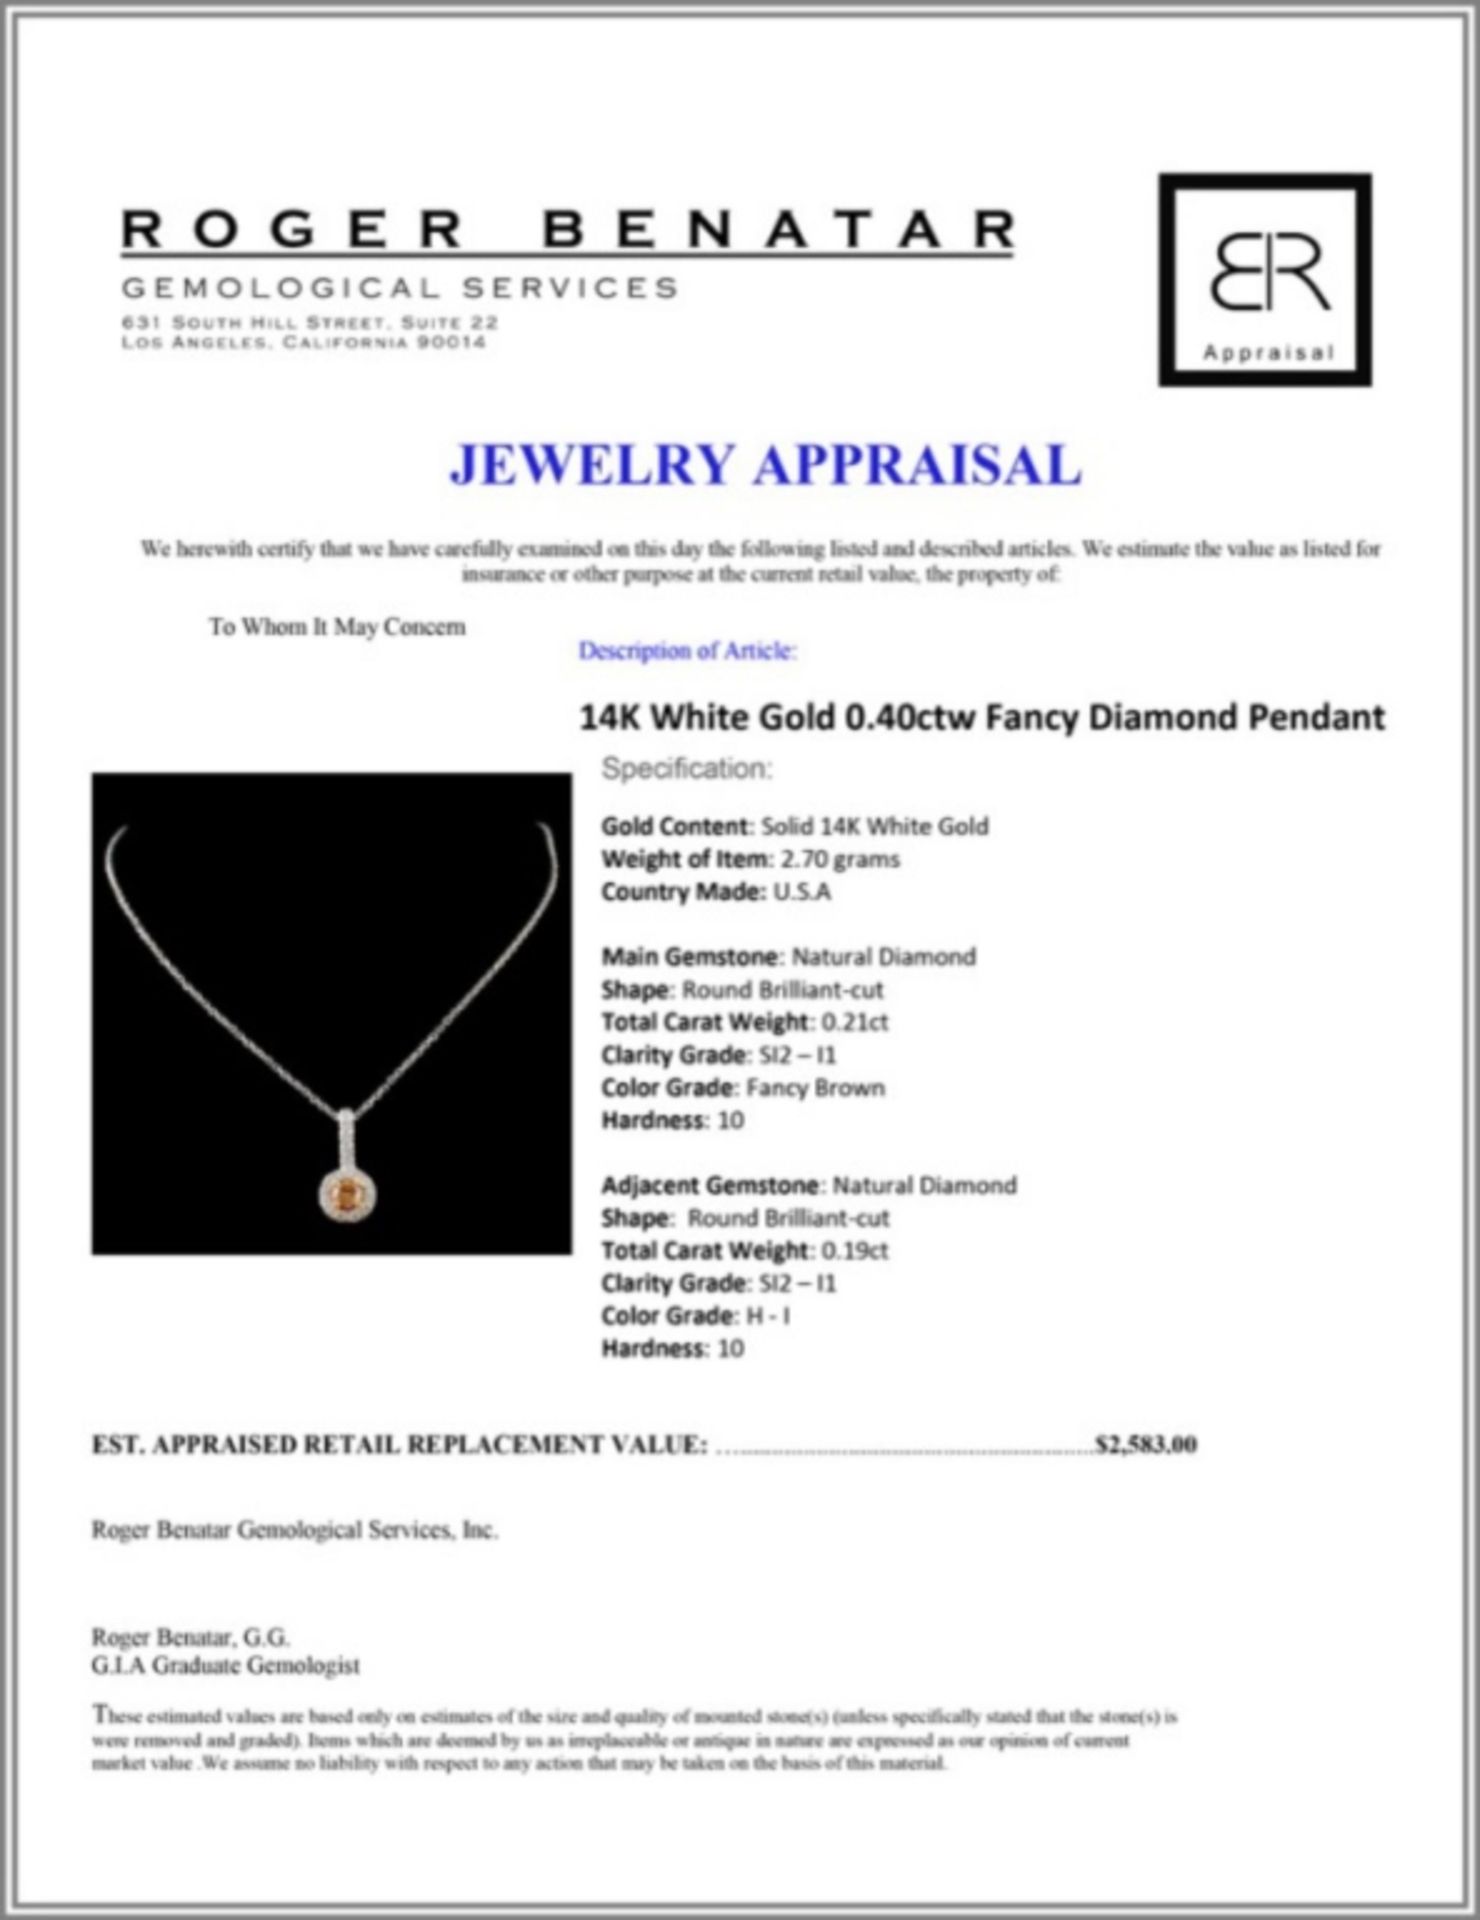 14K White Gold 0.40ctw Fancy Diamond Pendant - Image 3 of 3